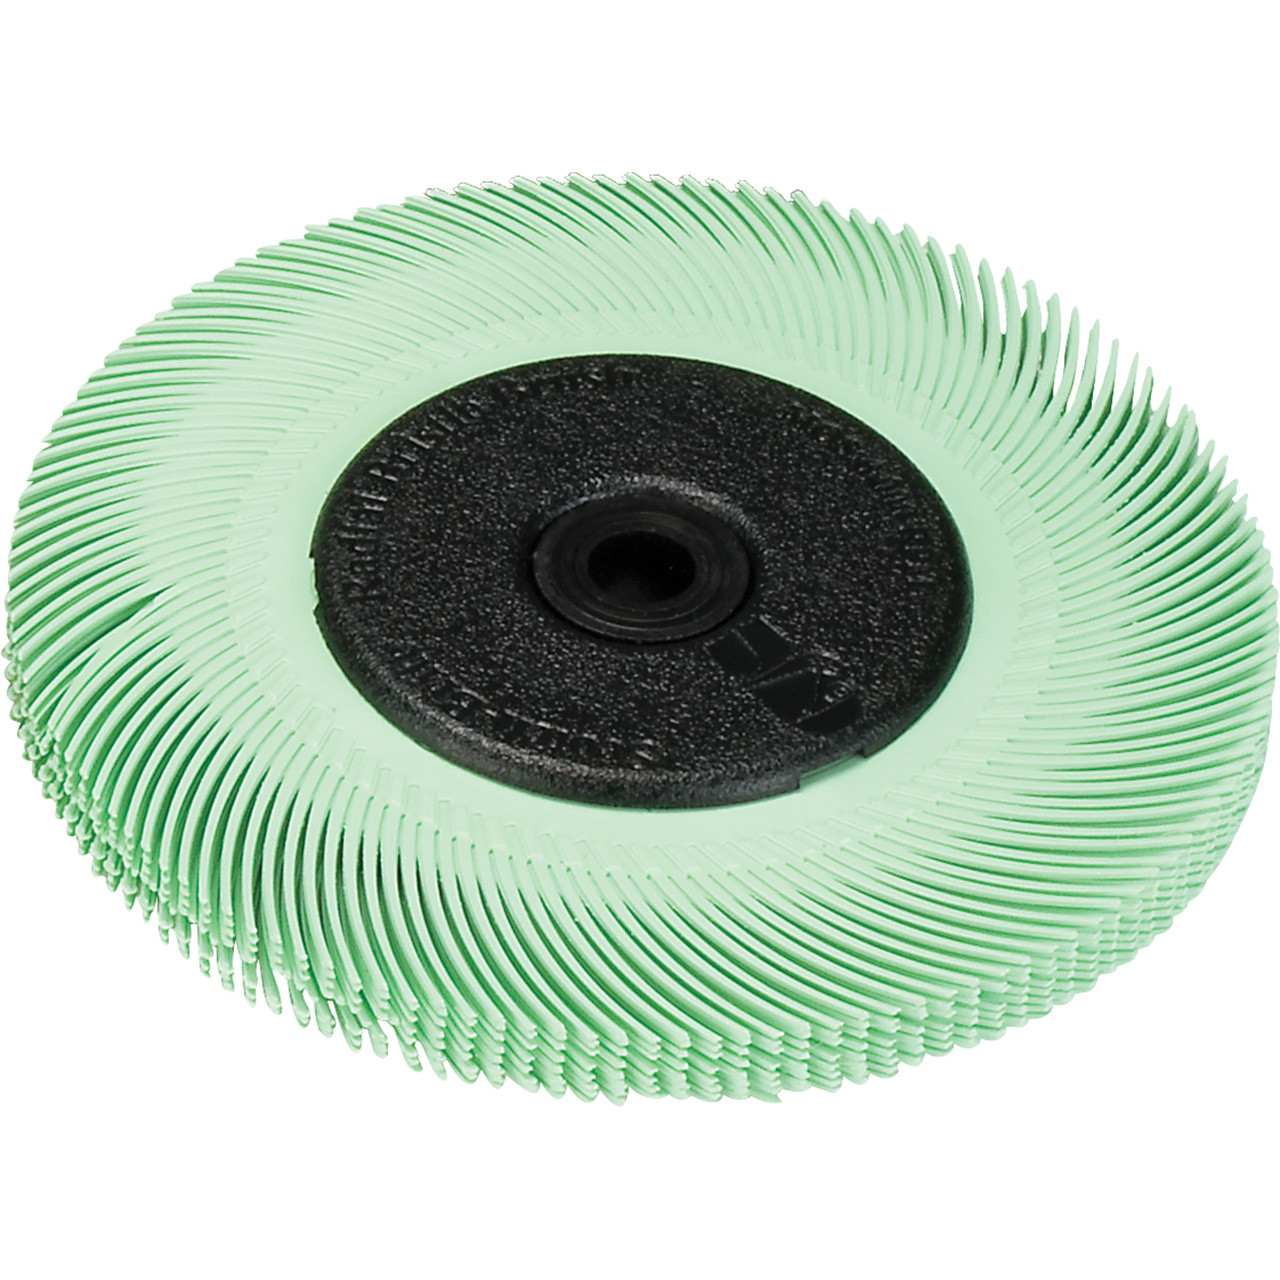 3M™ Radial Bristle Discs 6" 8-Ply, Light Green (1 Micron)